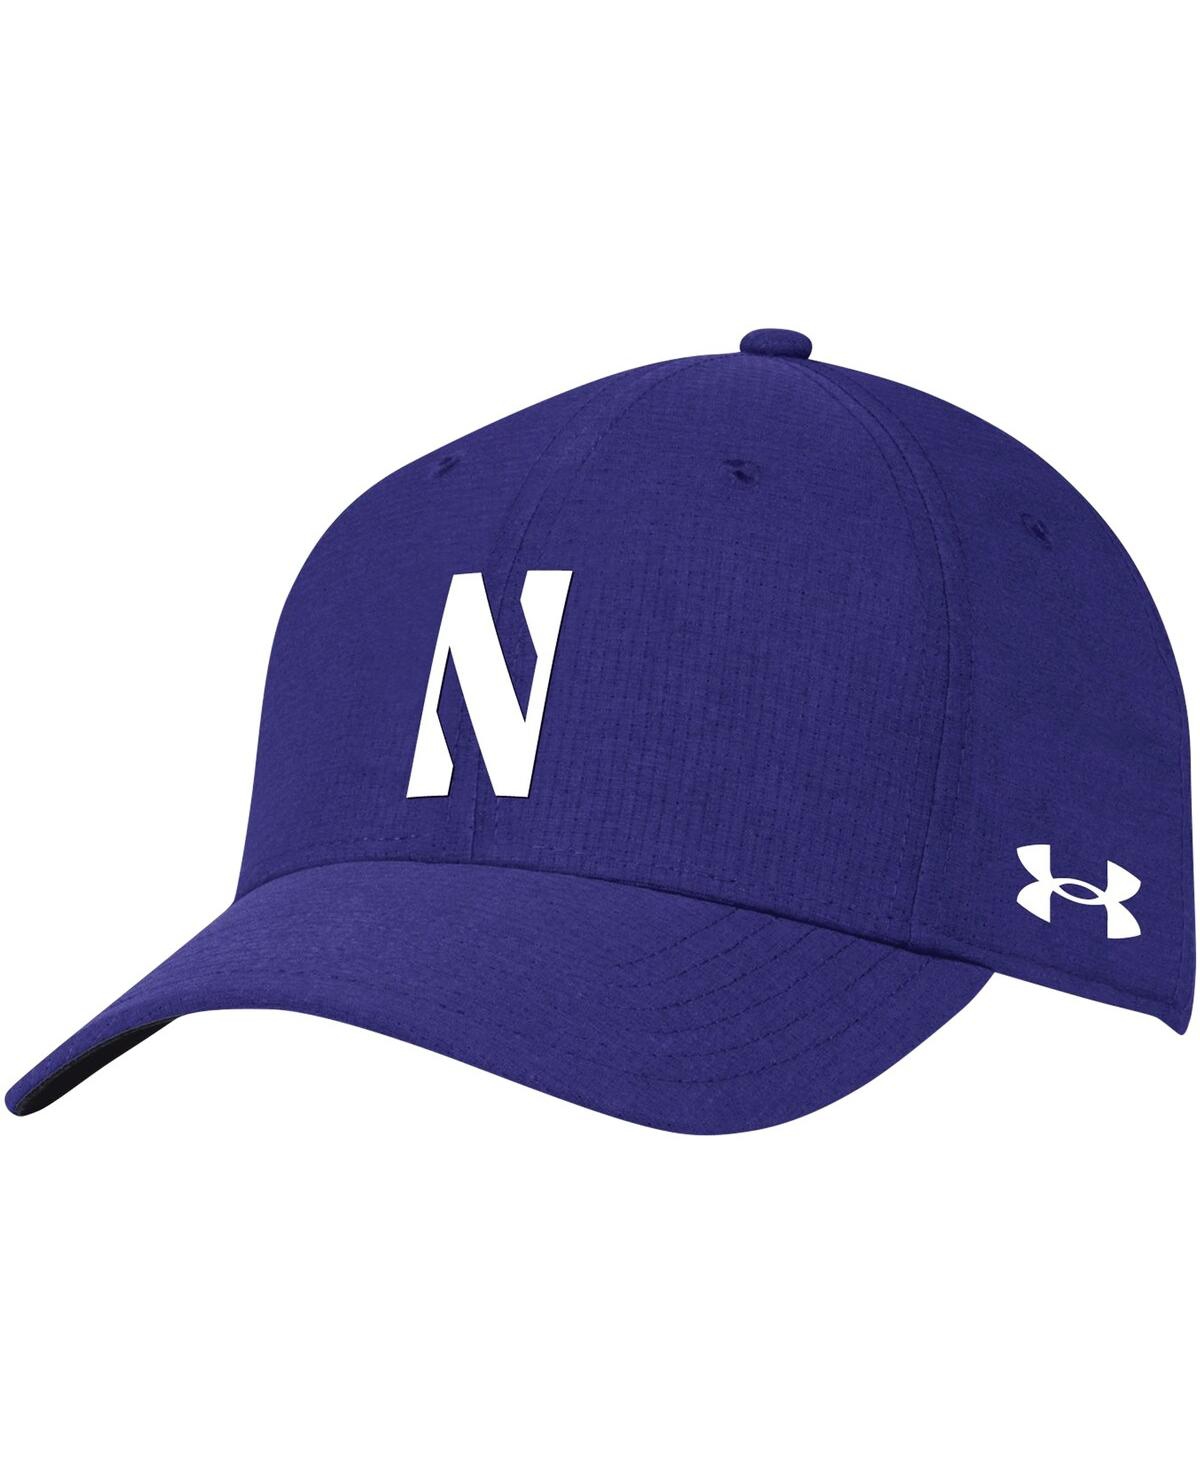 Shop Under Armour Men's  Purple Northwestern Wildcats Iso-chill Blitzing Accent Flex Hat